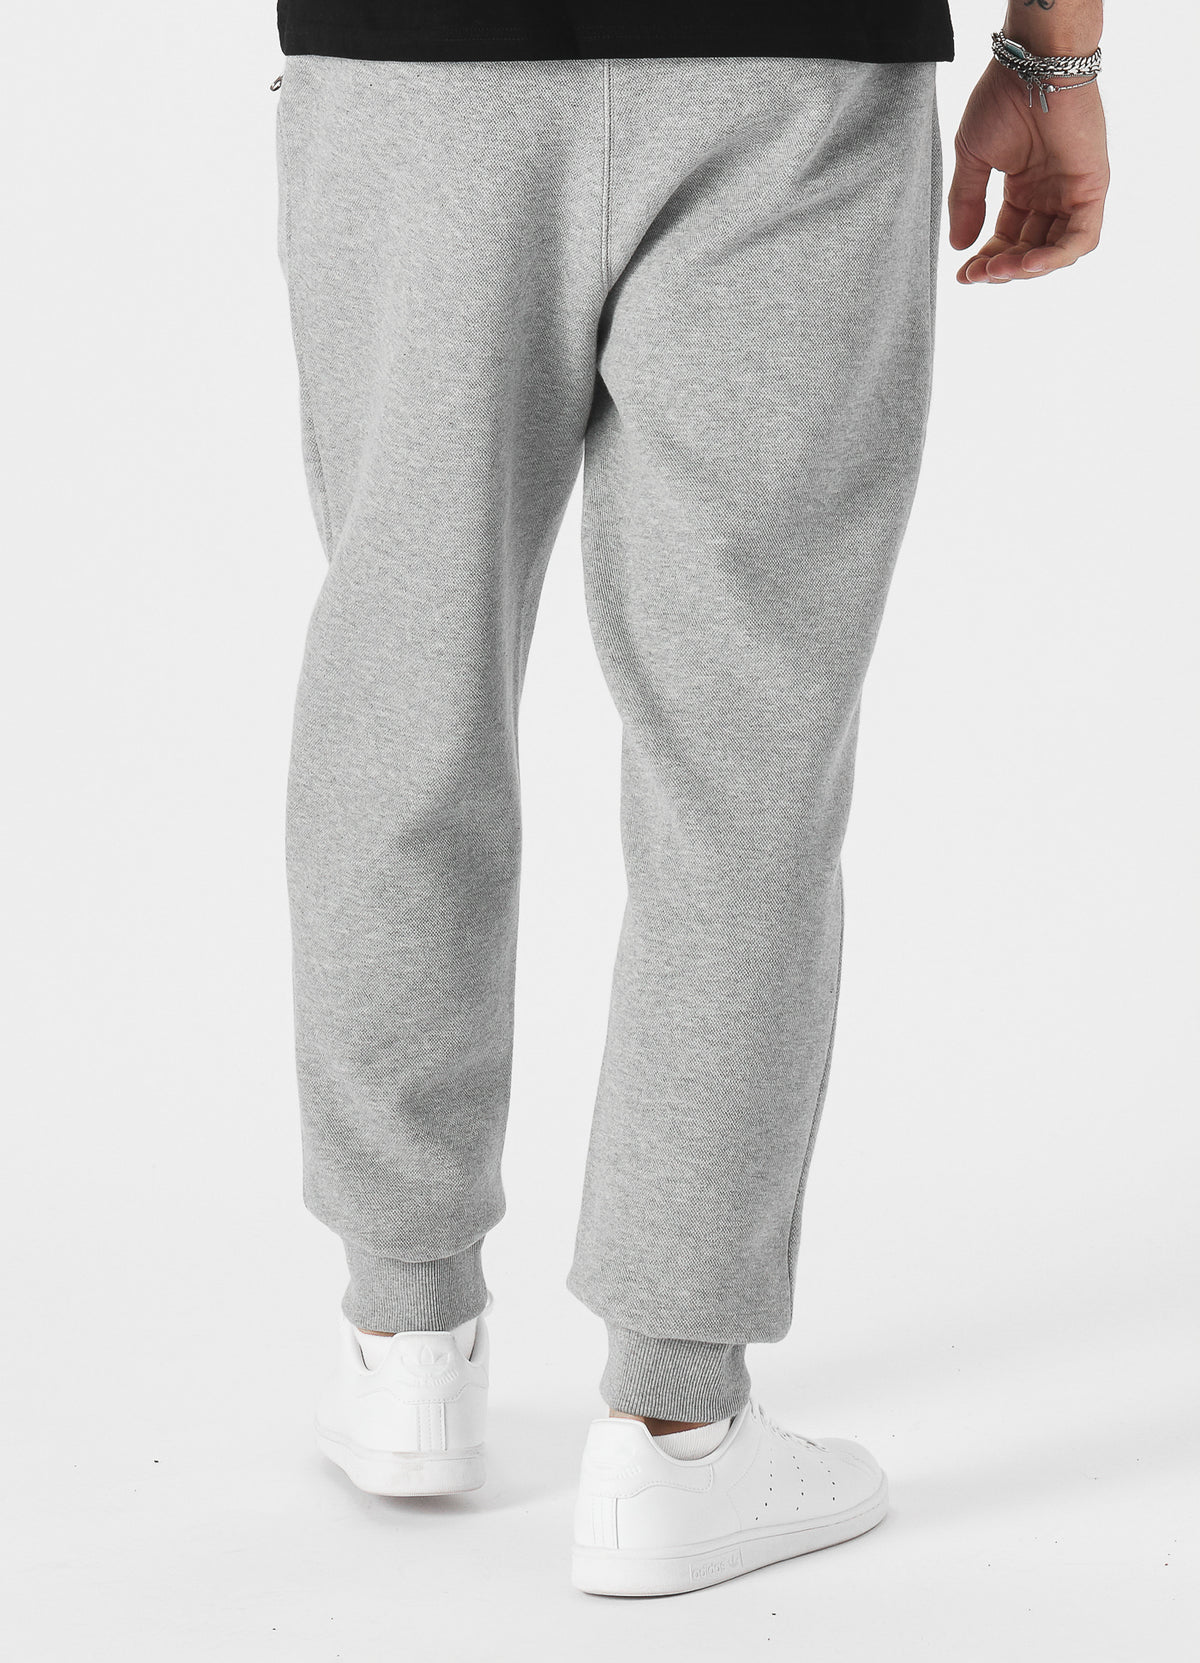 NEW LOGO Premium Pique Grey Track Pants.